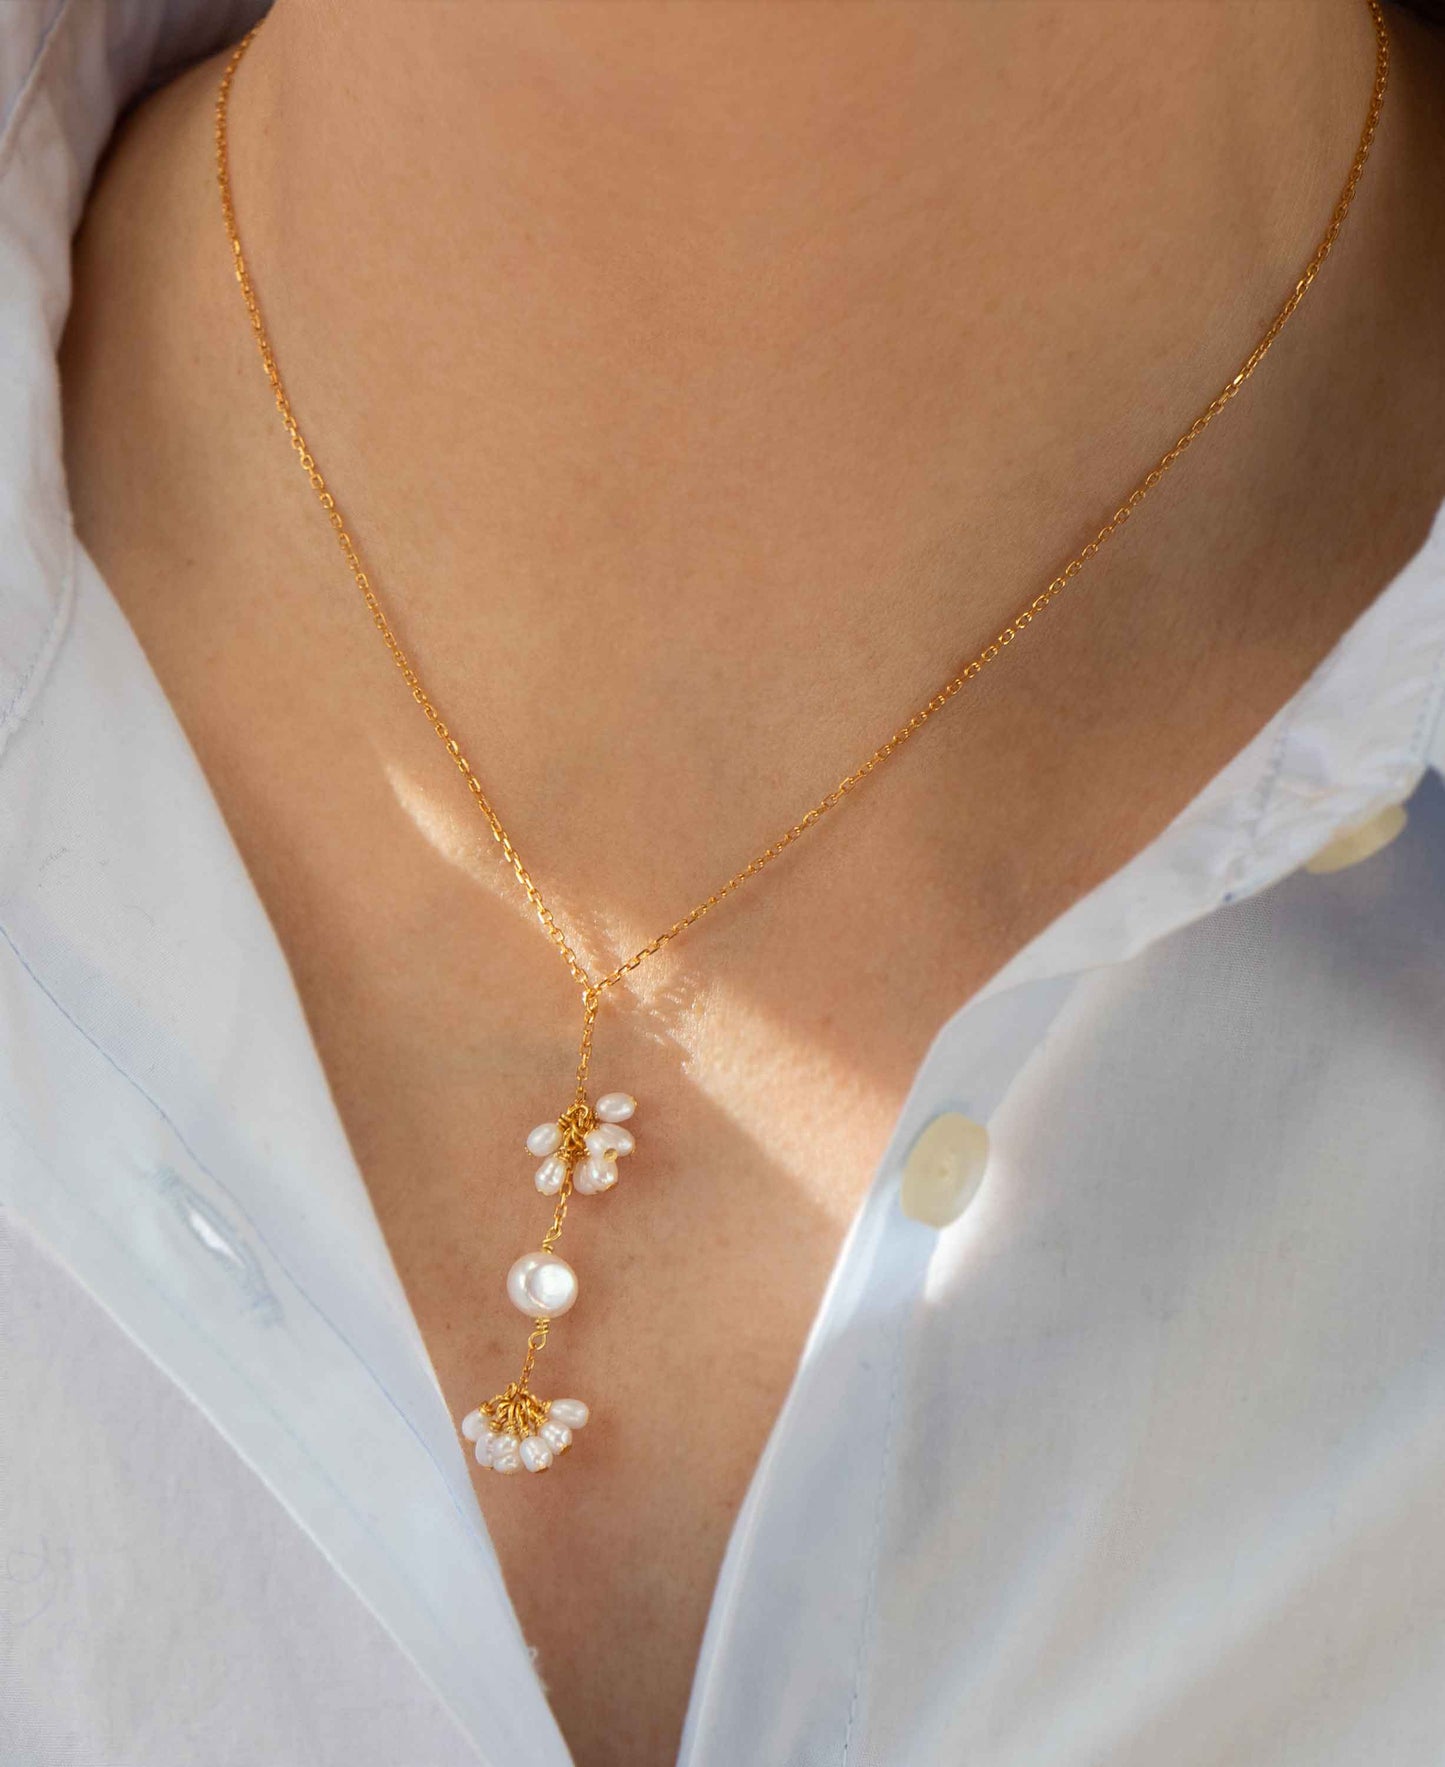 Selma necklace